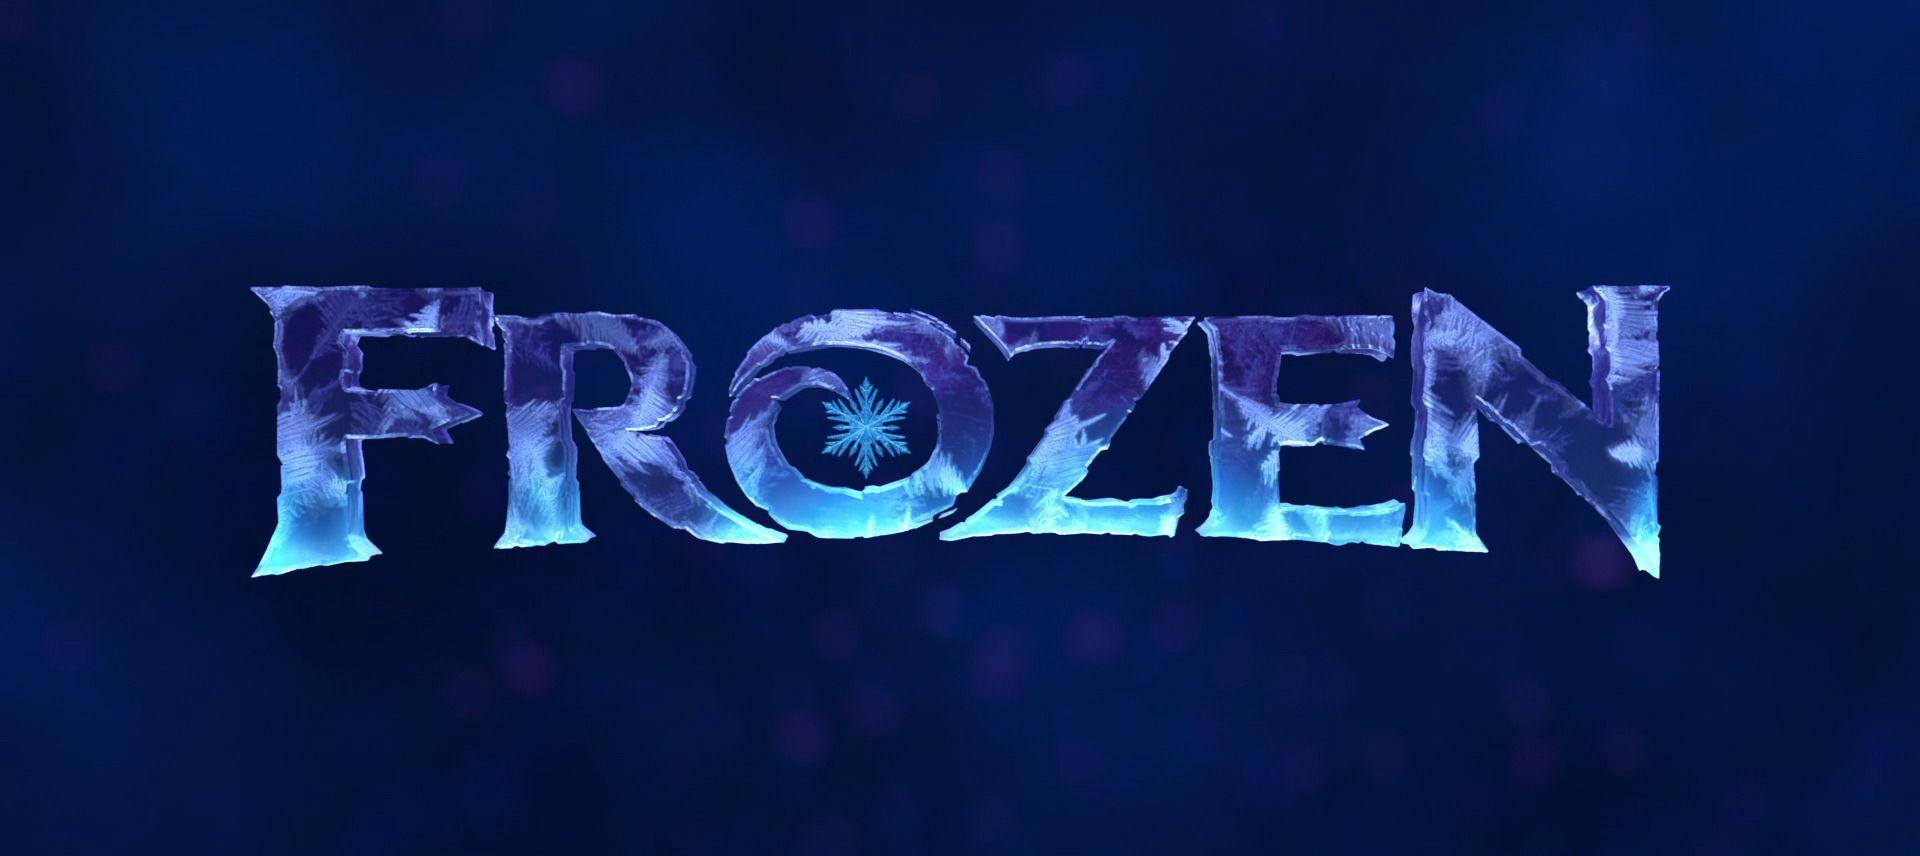 Blue Frozen Logo - Frozen image FROZEN ENGLISH LOGO HD wallpaper and background photo